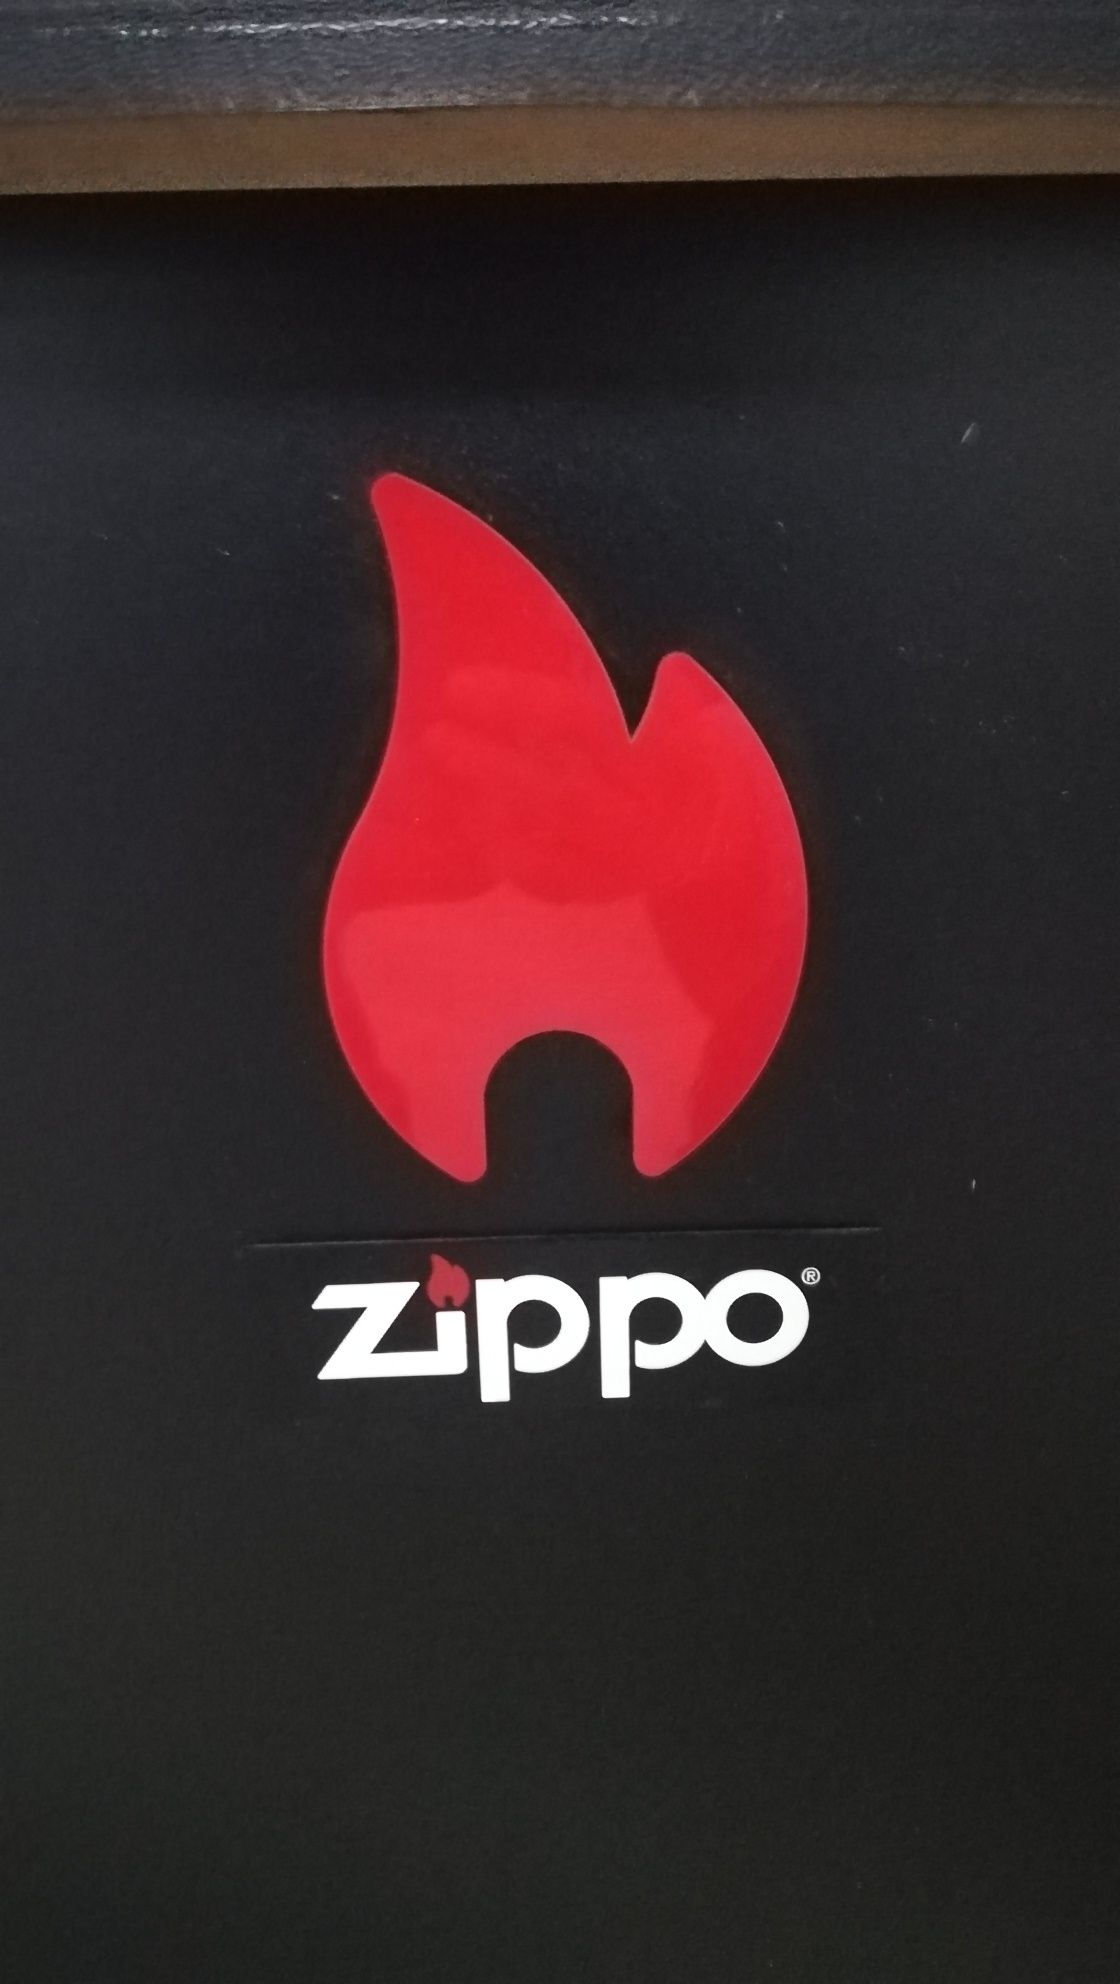 Expositor Publicitário da Zippo para isqueiros